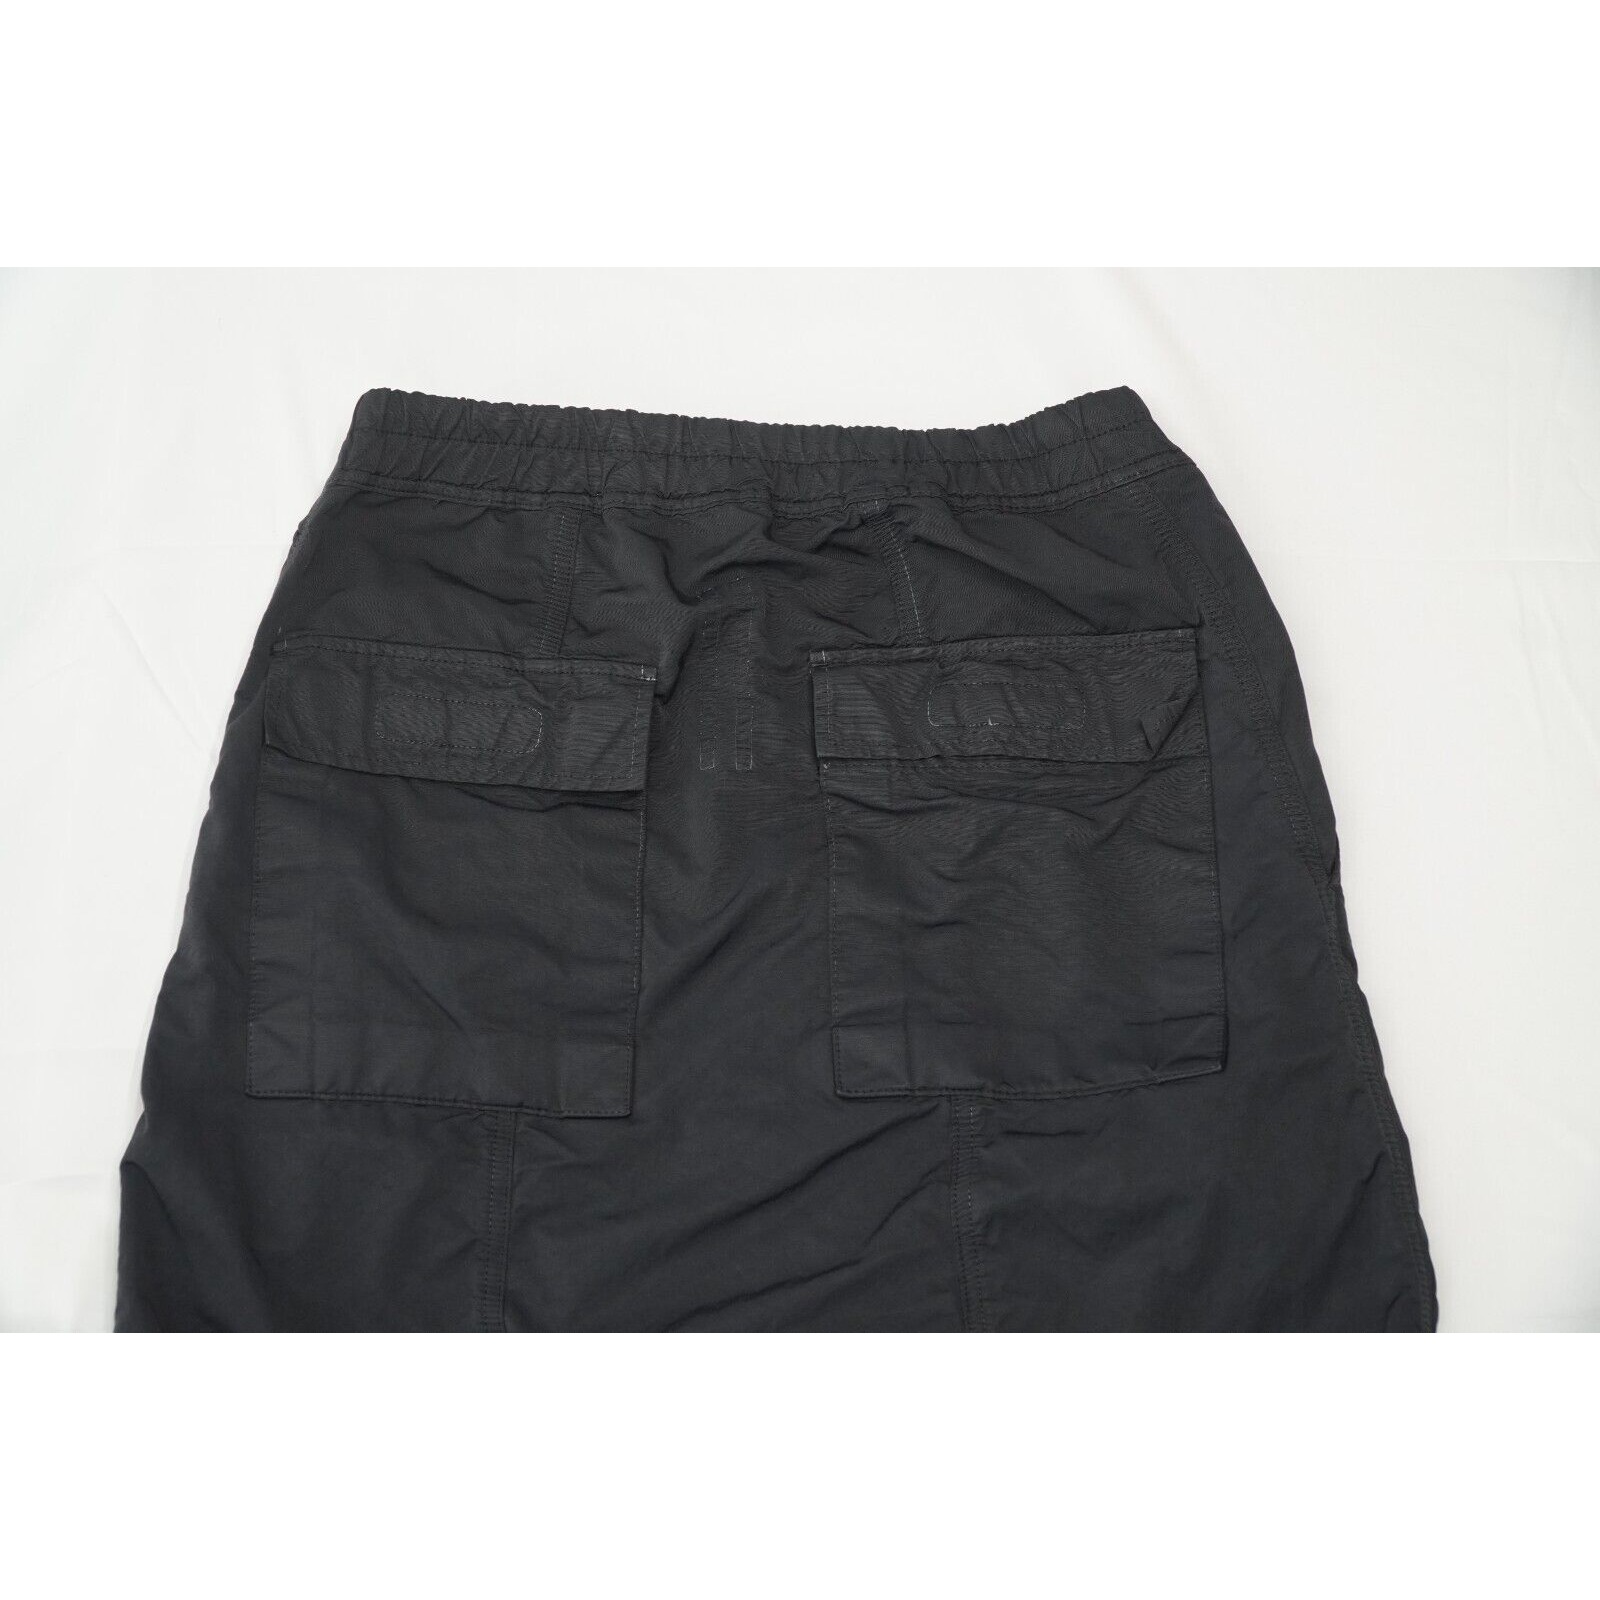 Black Lounge Pants Elastic Drawstring Drop Crotch Large - 7